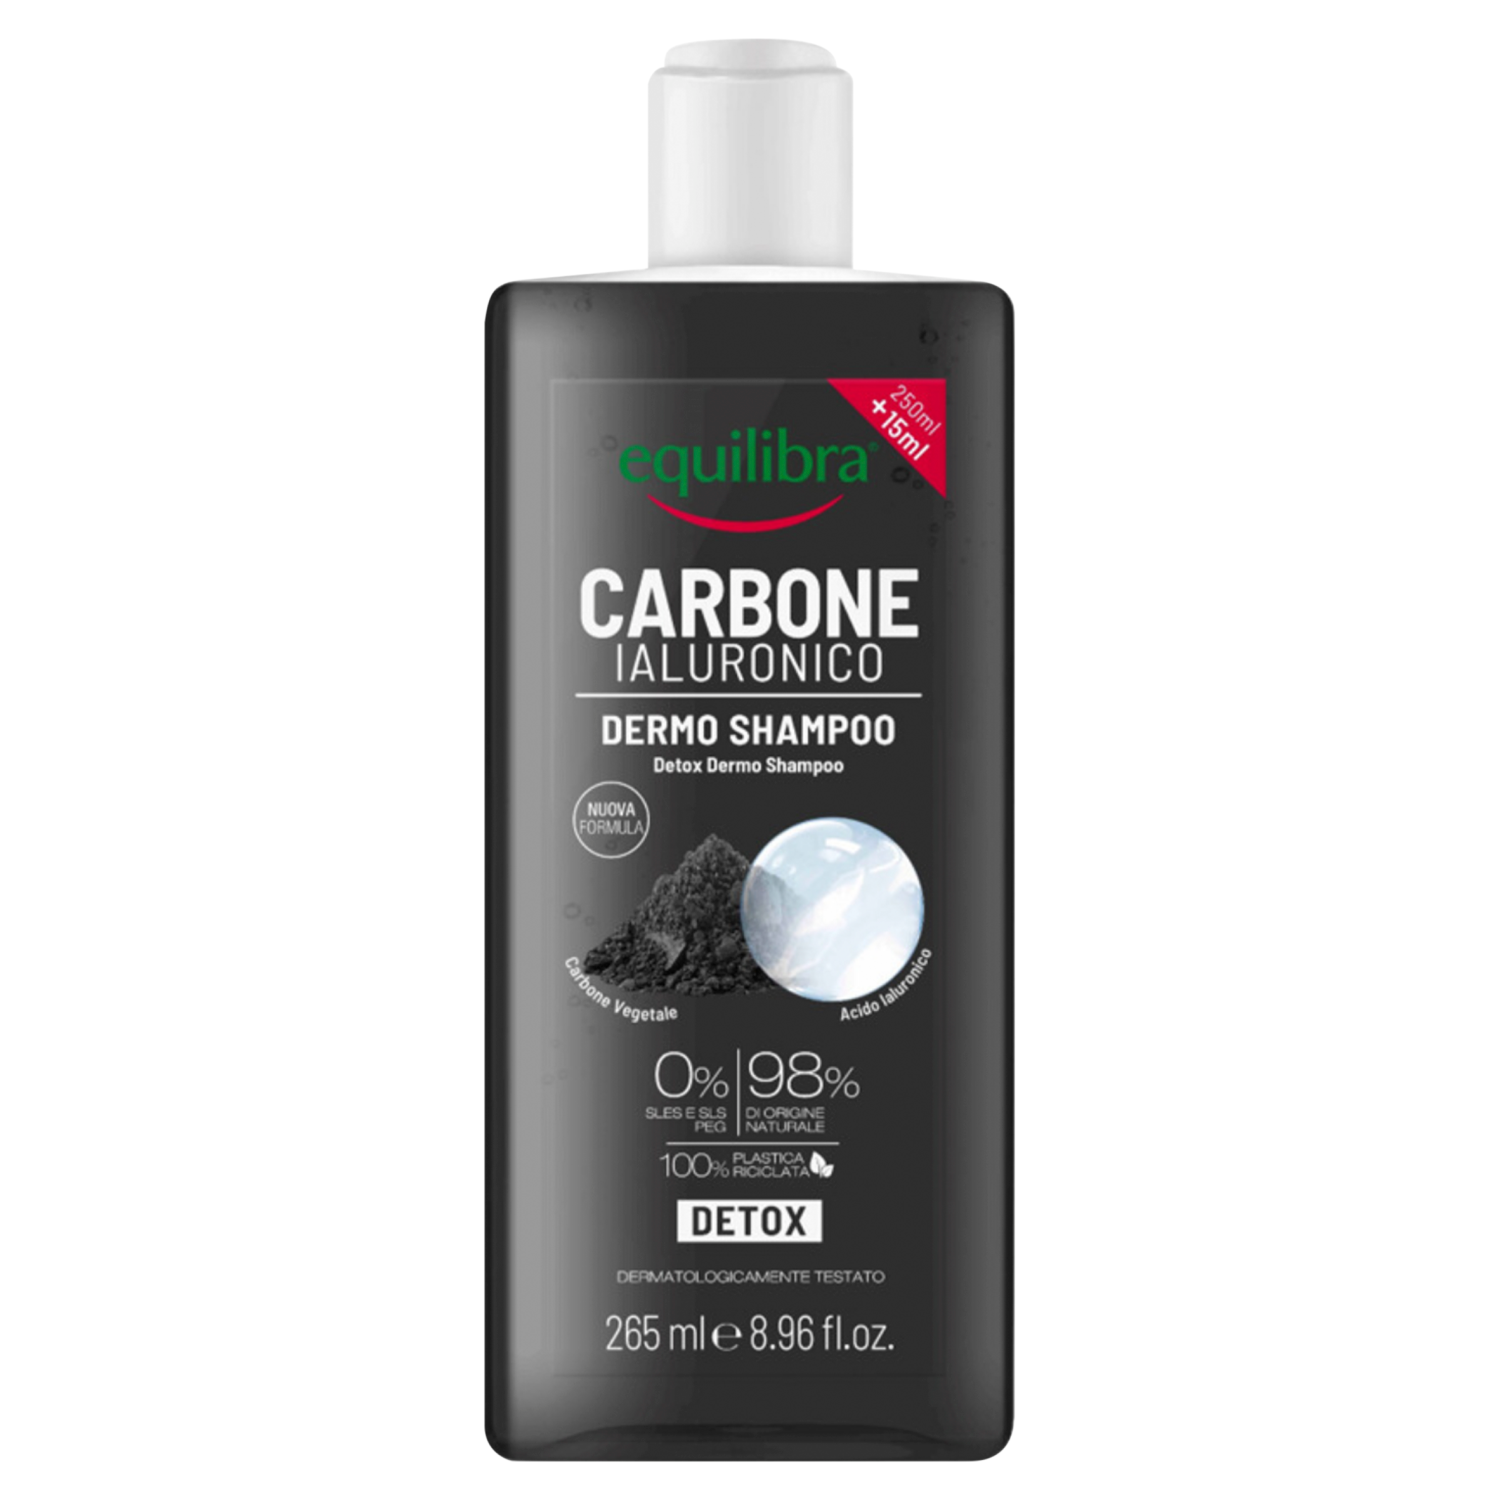 carbone attivo szampon